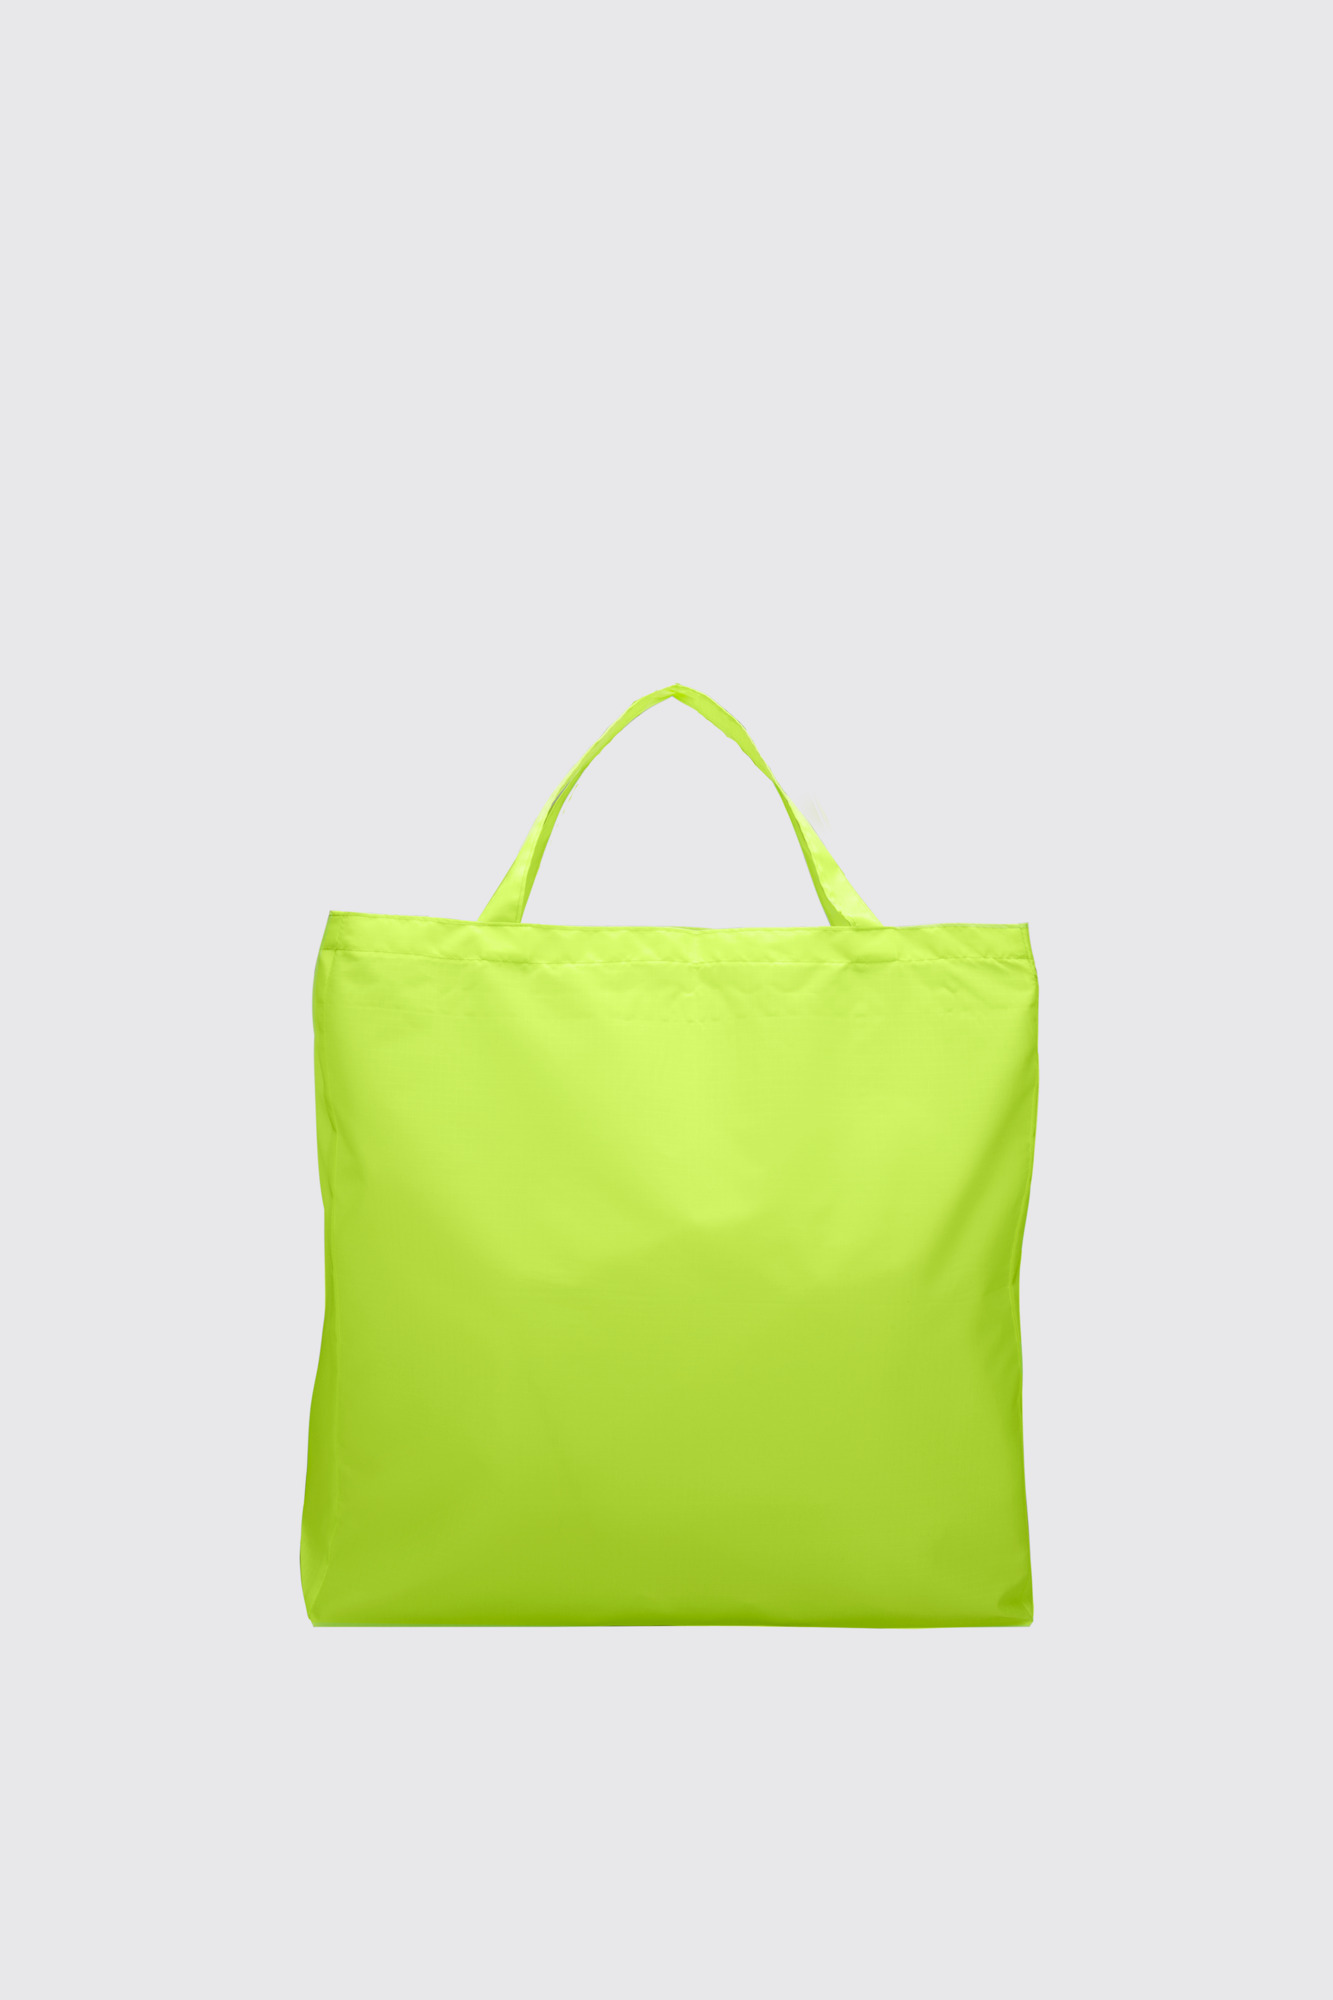 Fluorescent Yellow Neon Men Travel Bag